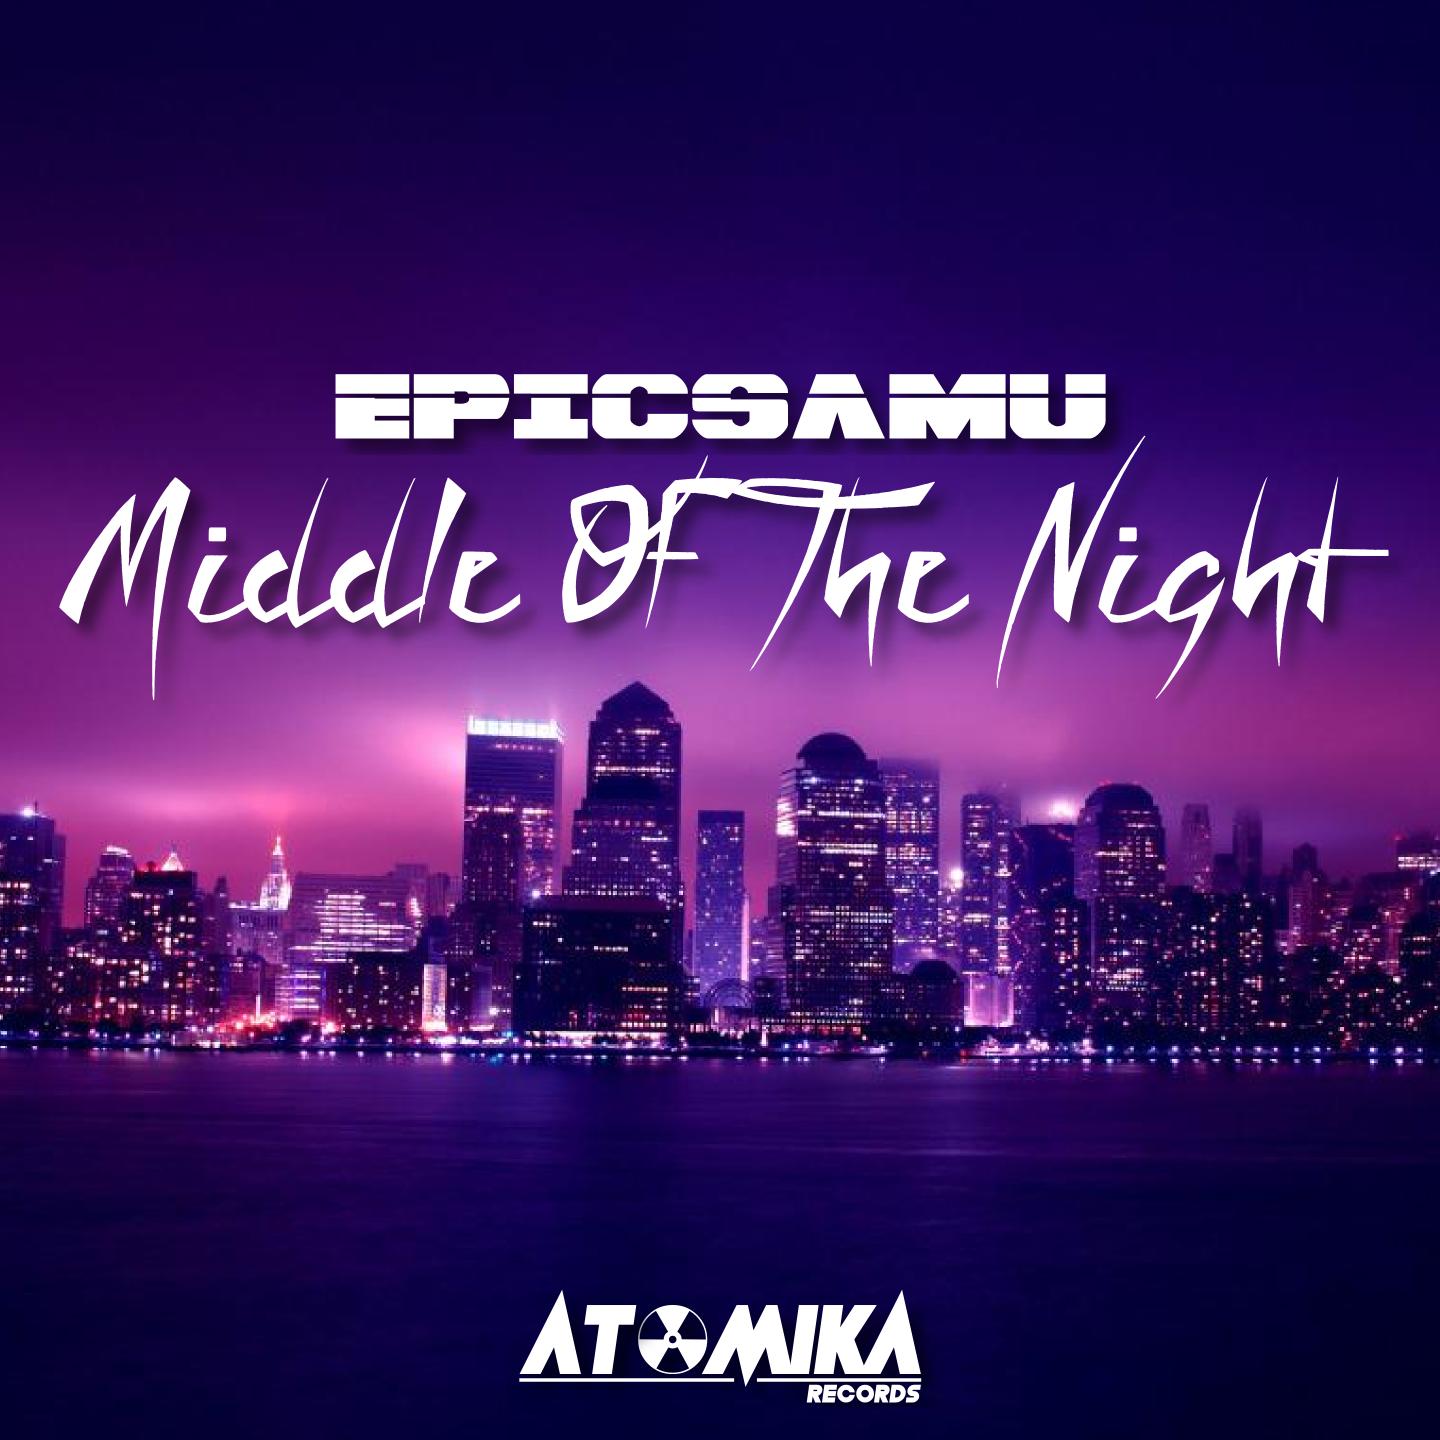 Middle of the night mp3. Middle of the Night. Трек Middle of the Night. Middle of the Night обложка. Обложка песни Middle of the Night.